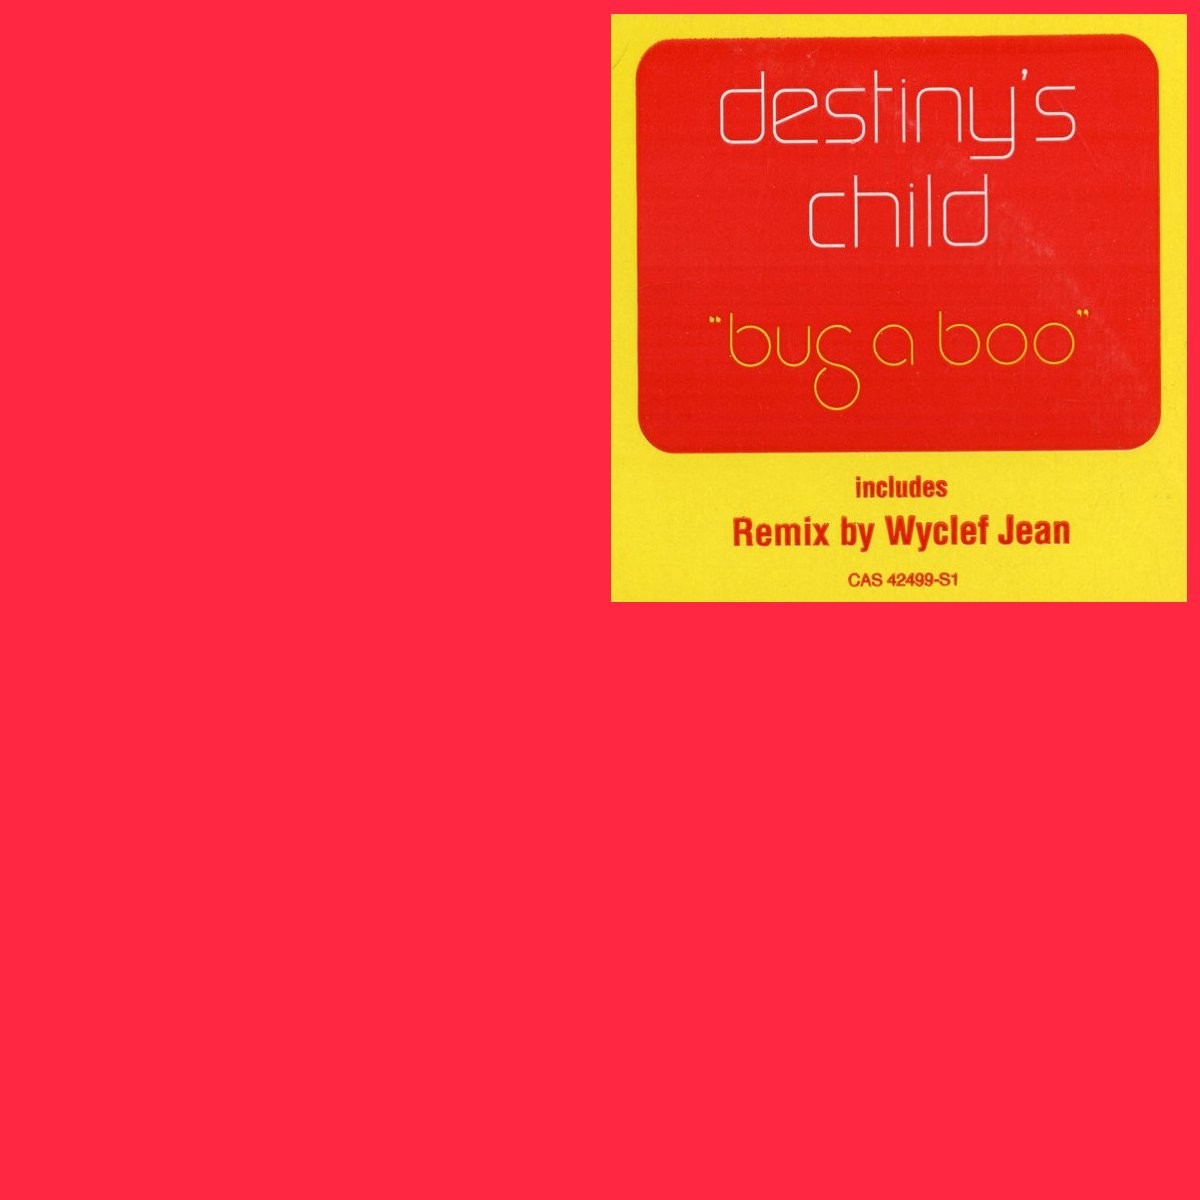 Destinys Child - Bug a boo (LP Version / Refugee Camp Remix featuring Wyclef Jean / 3 Maurice Joshua Mixes) Promo